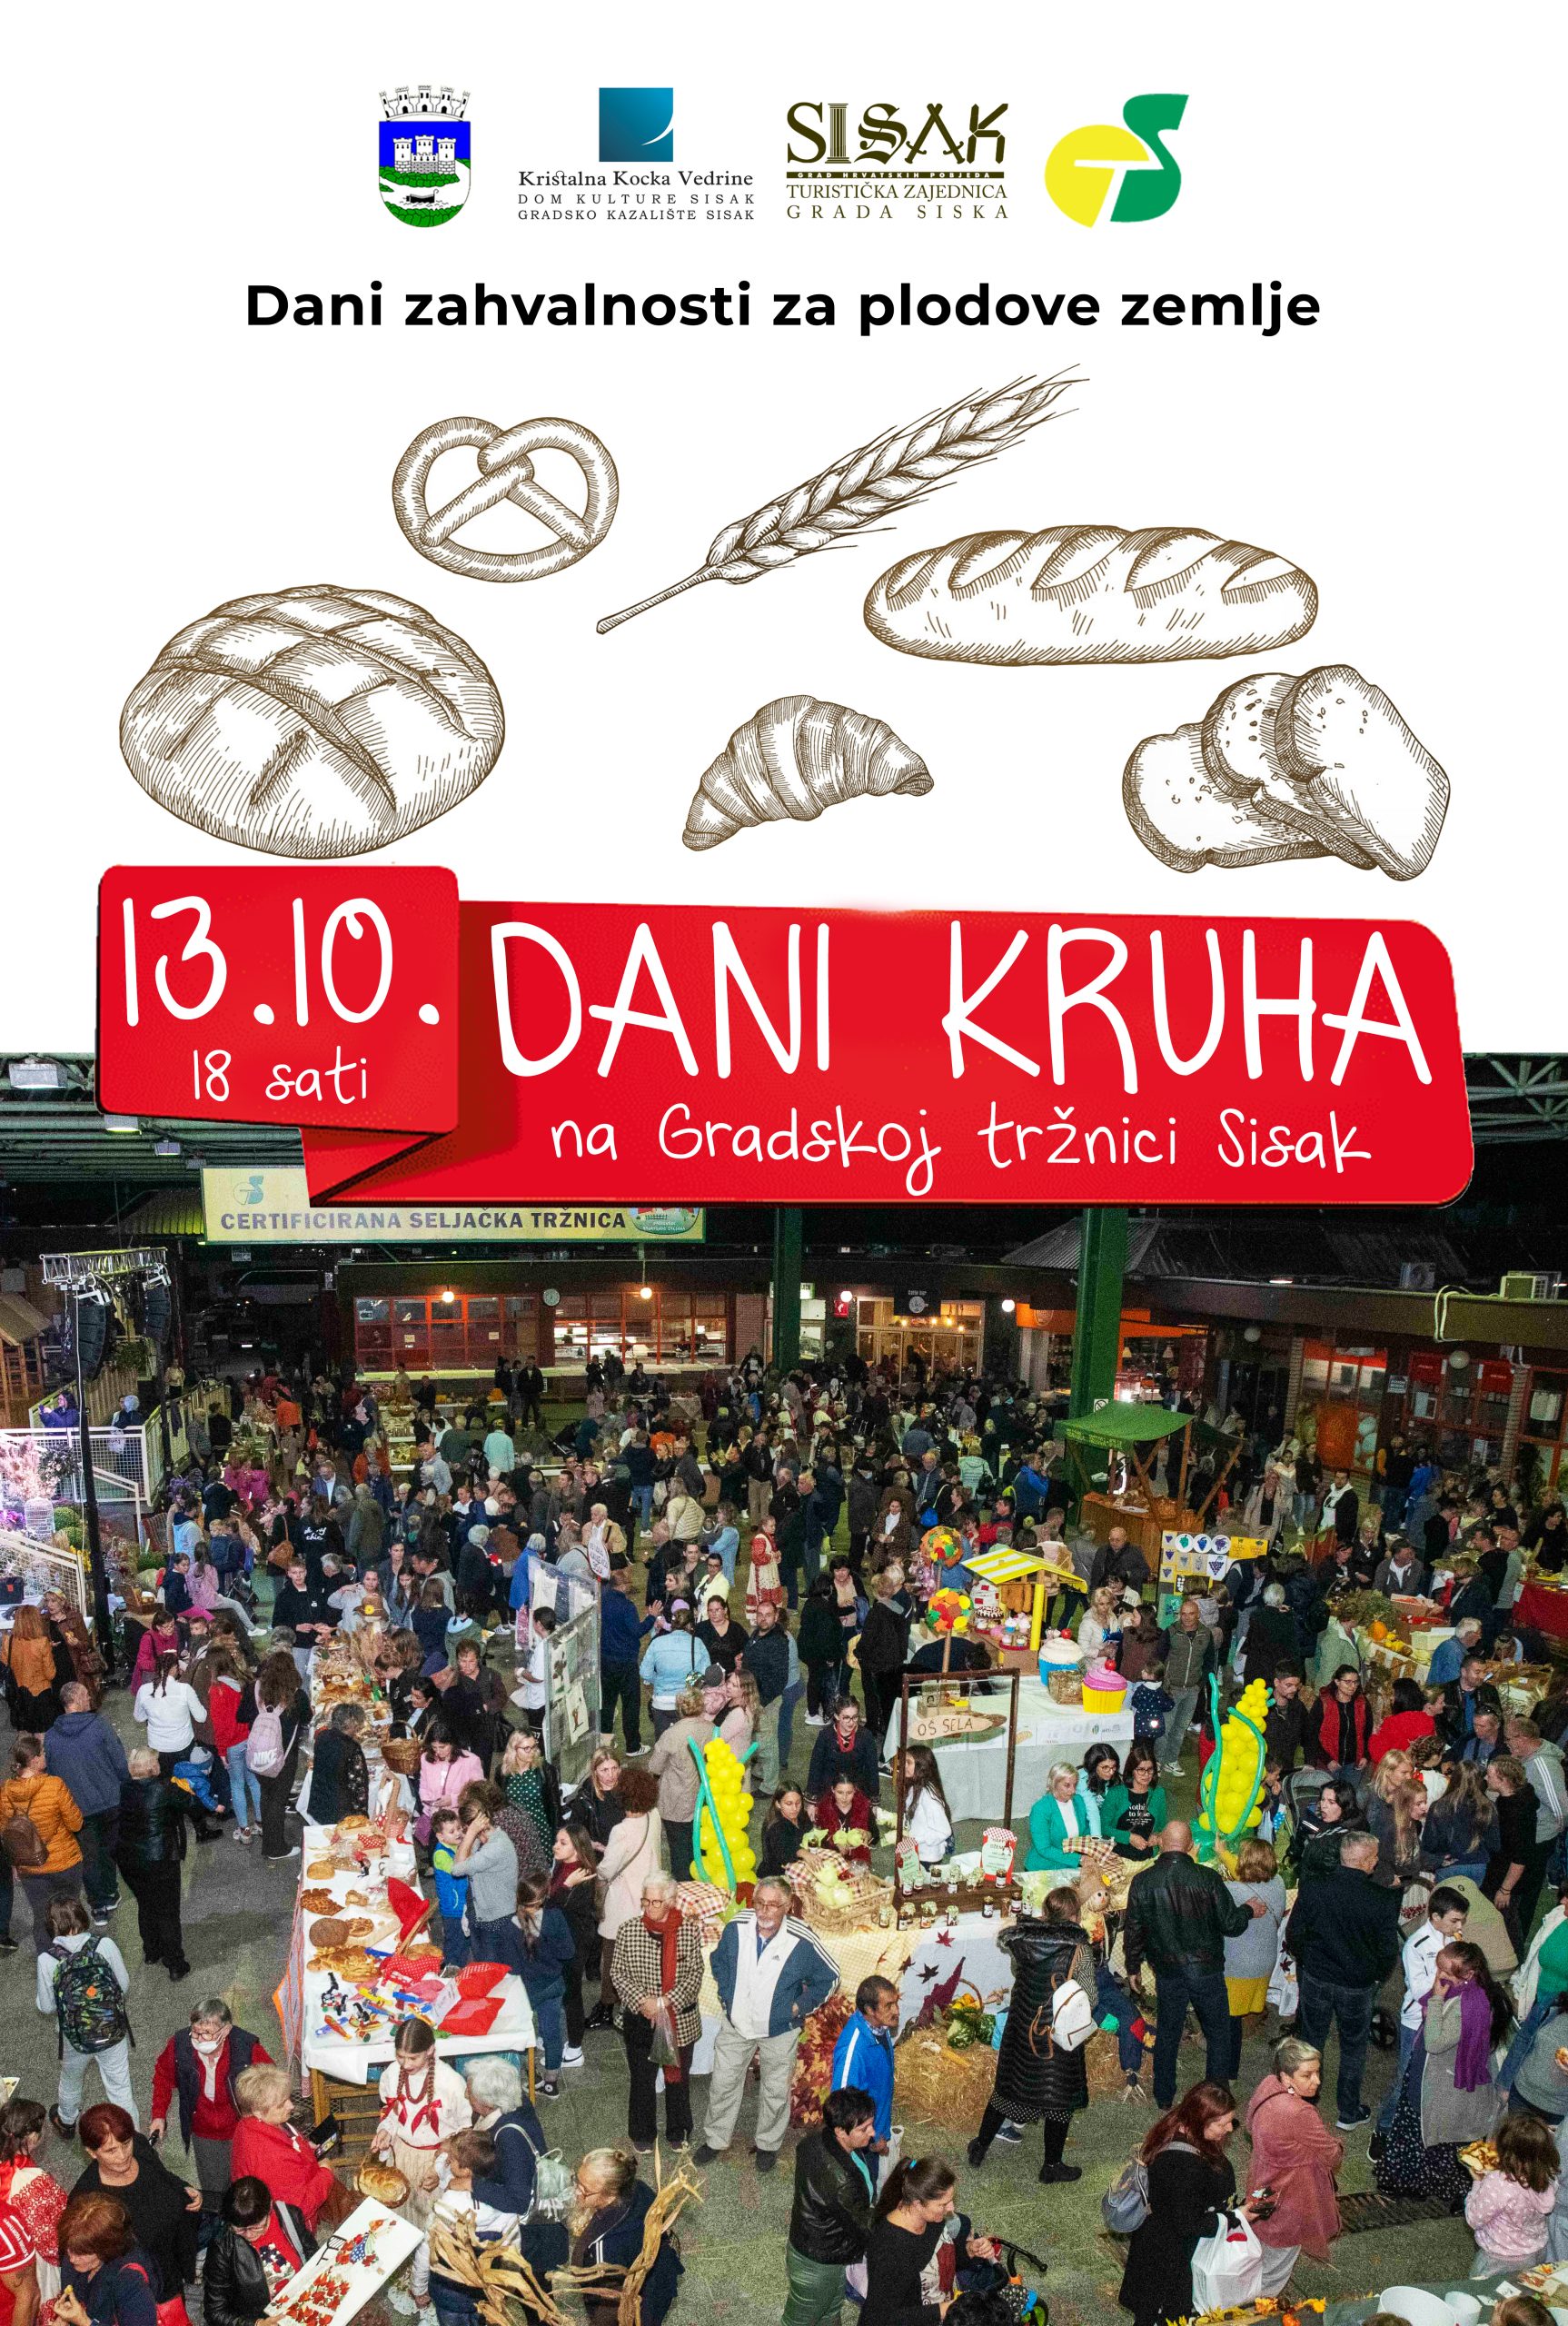 You are currently viewing Dani kruha na Gradskoj tržnici Sisak